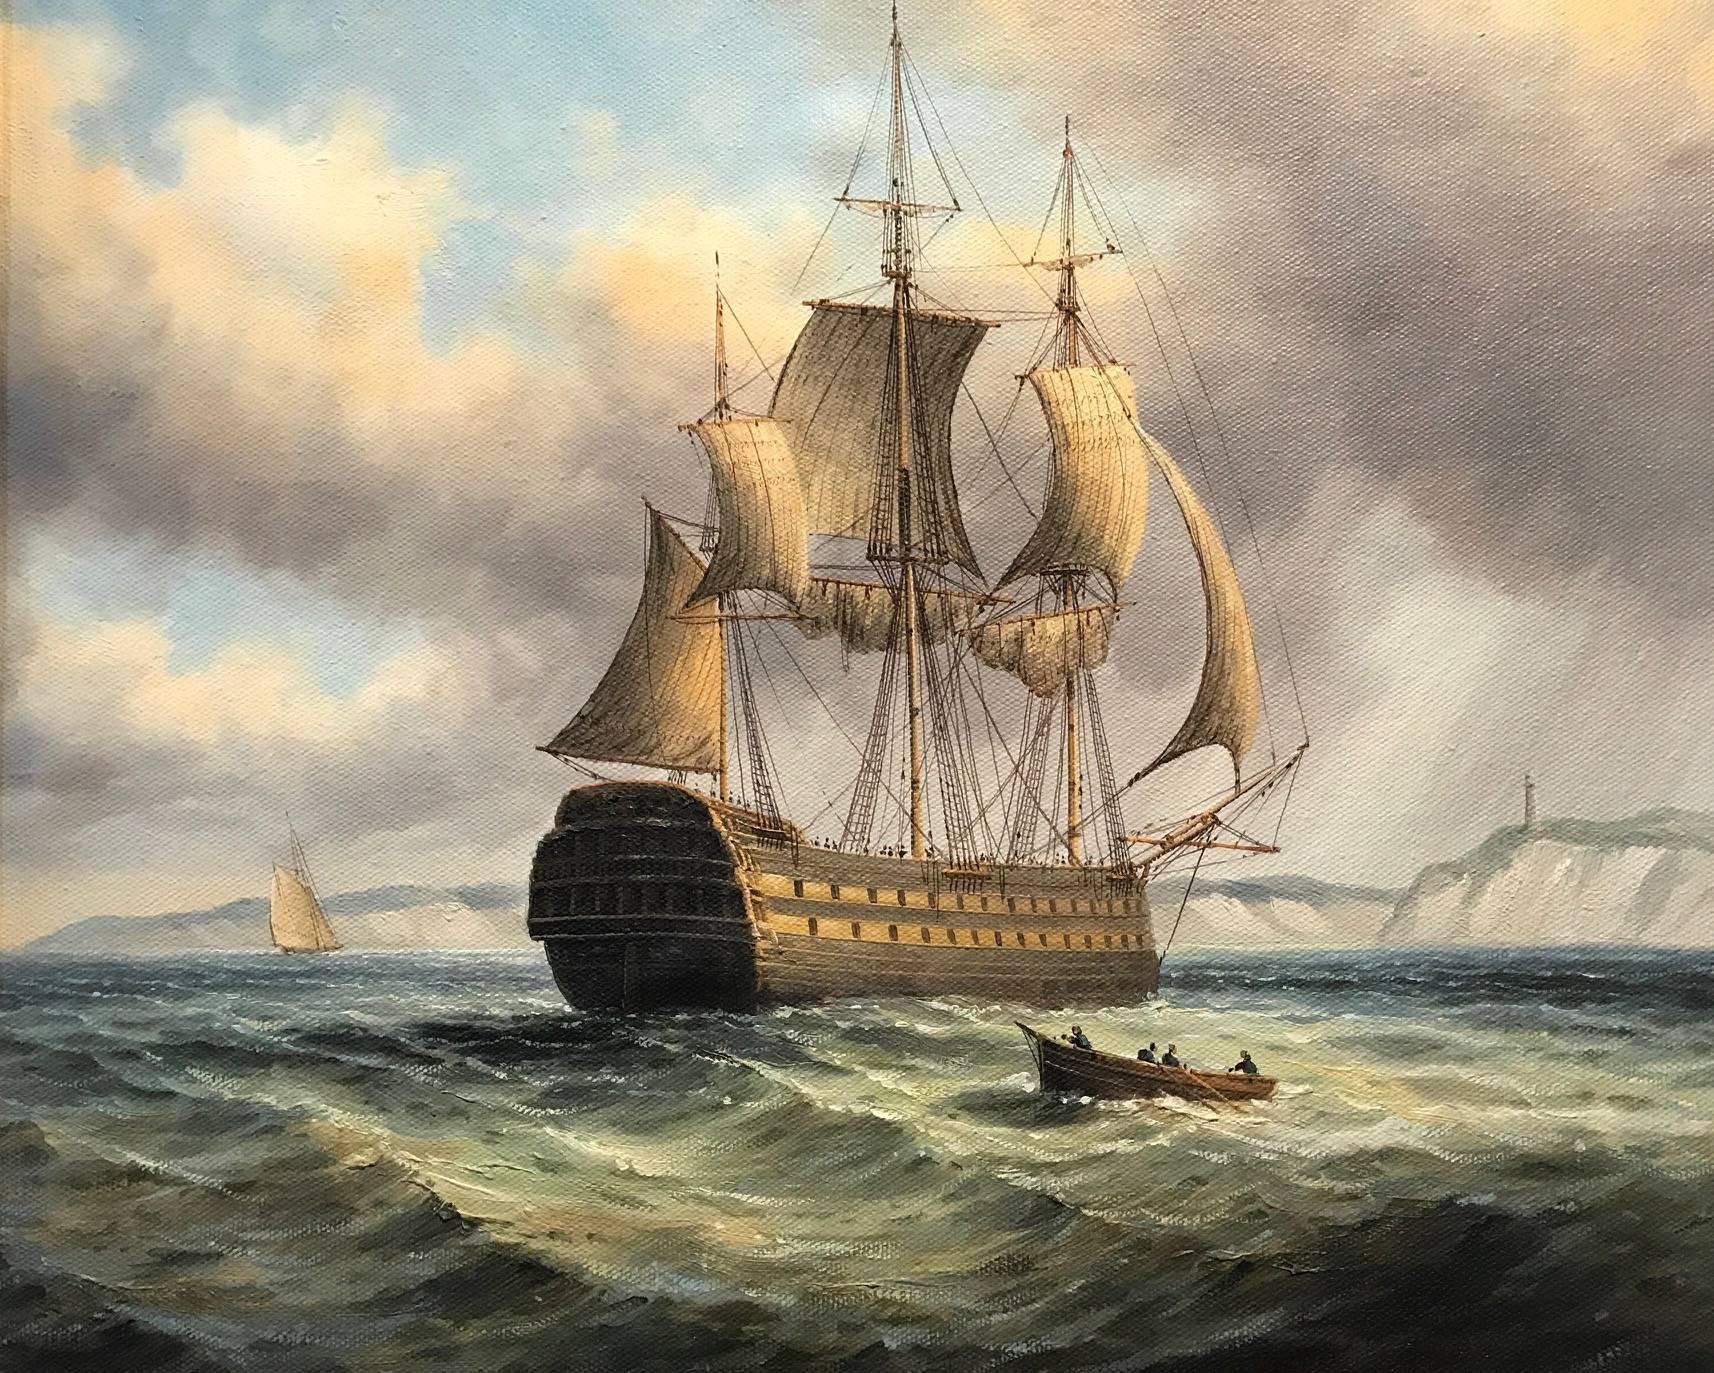 James Hardy Landscape Painting - Napoleonic Warship in Seas off Coastline - Fine Oil Painting